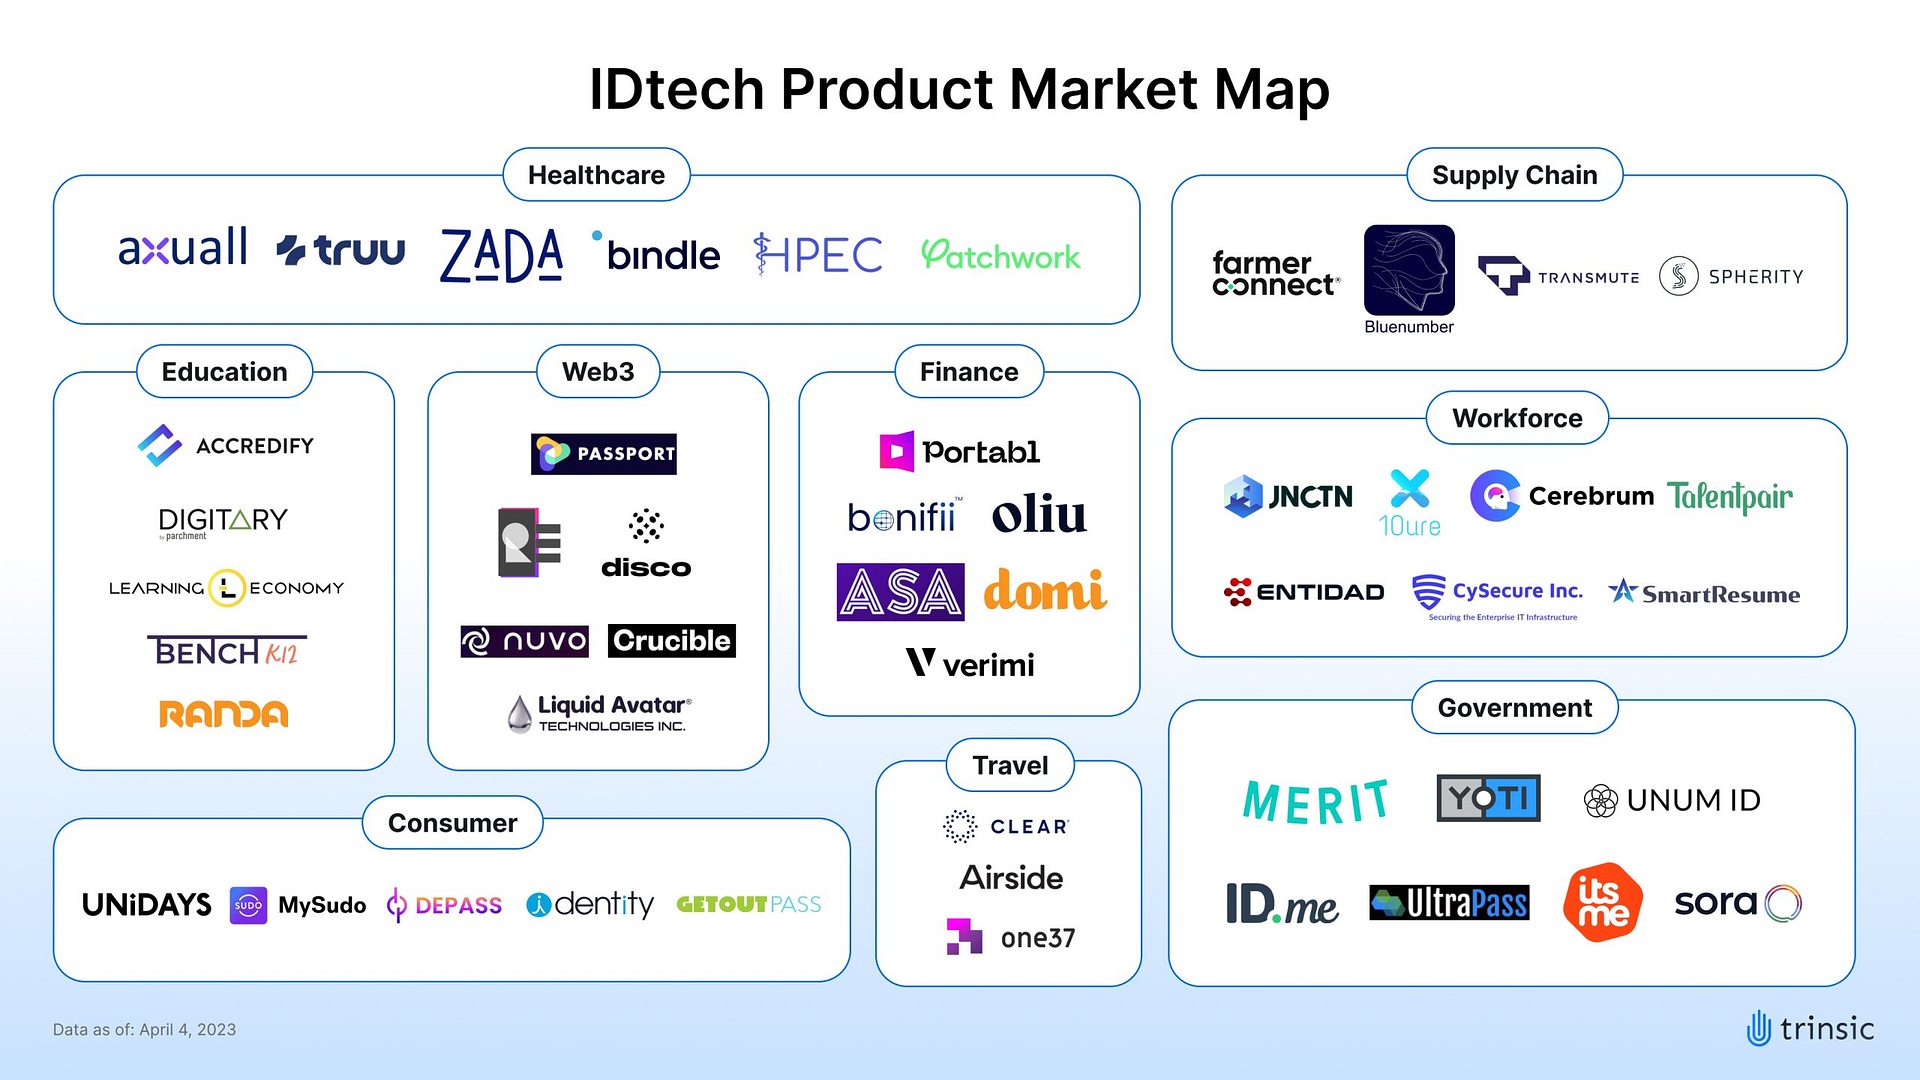 IDtech Product Market Map (Apr 2023)